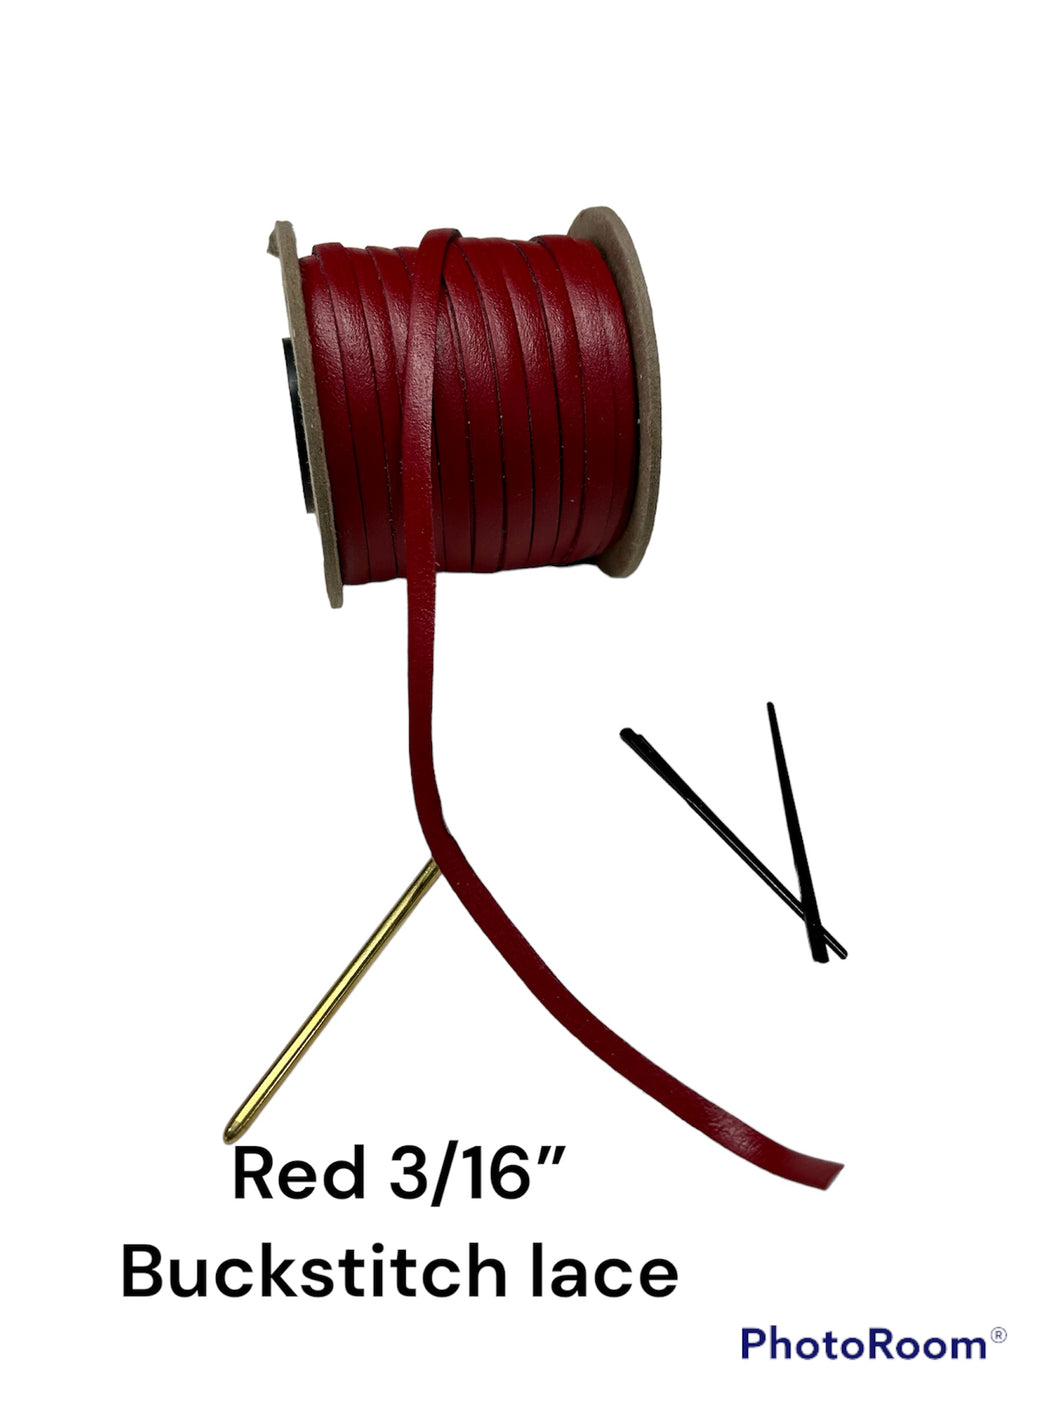 Red 3/16” Buckstitch lace